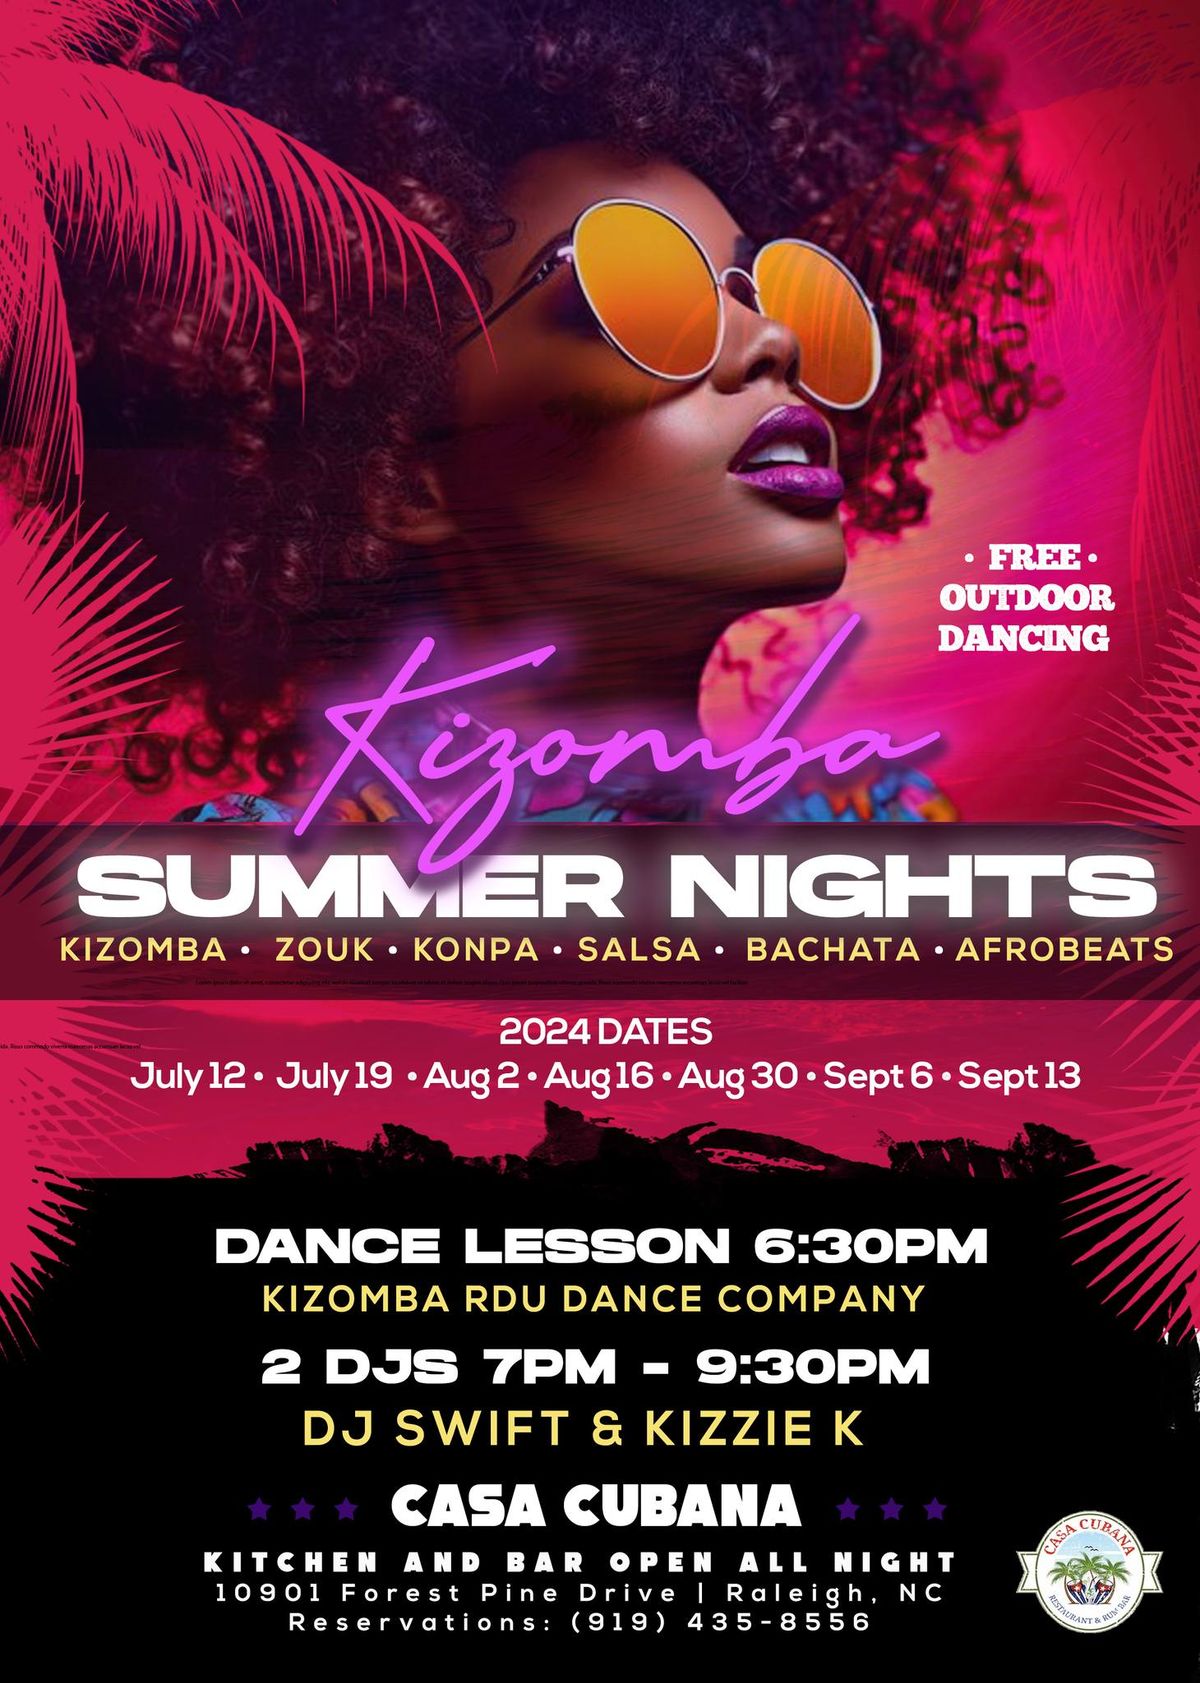 Kizomba Summer Nights at Casa Cubana - FREE EVENT - OUTDOOR DANCING - AFRO x LATIN PARTY